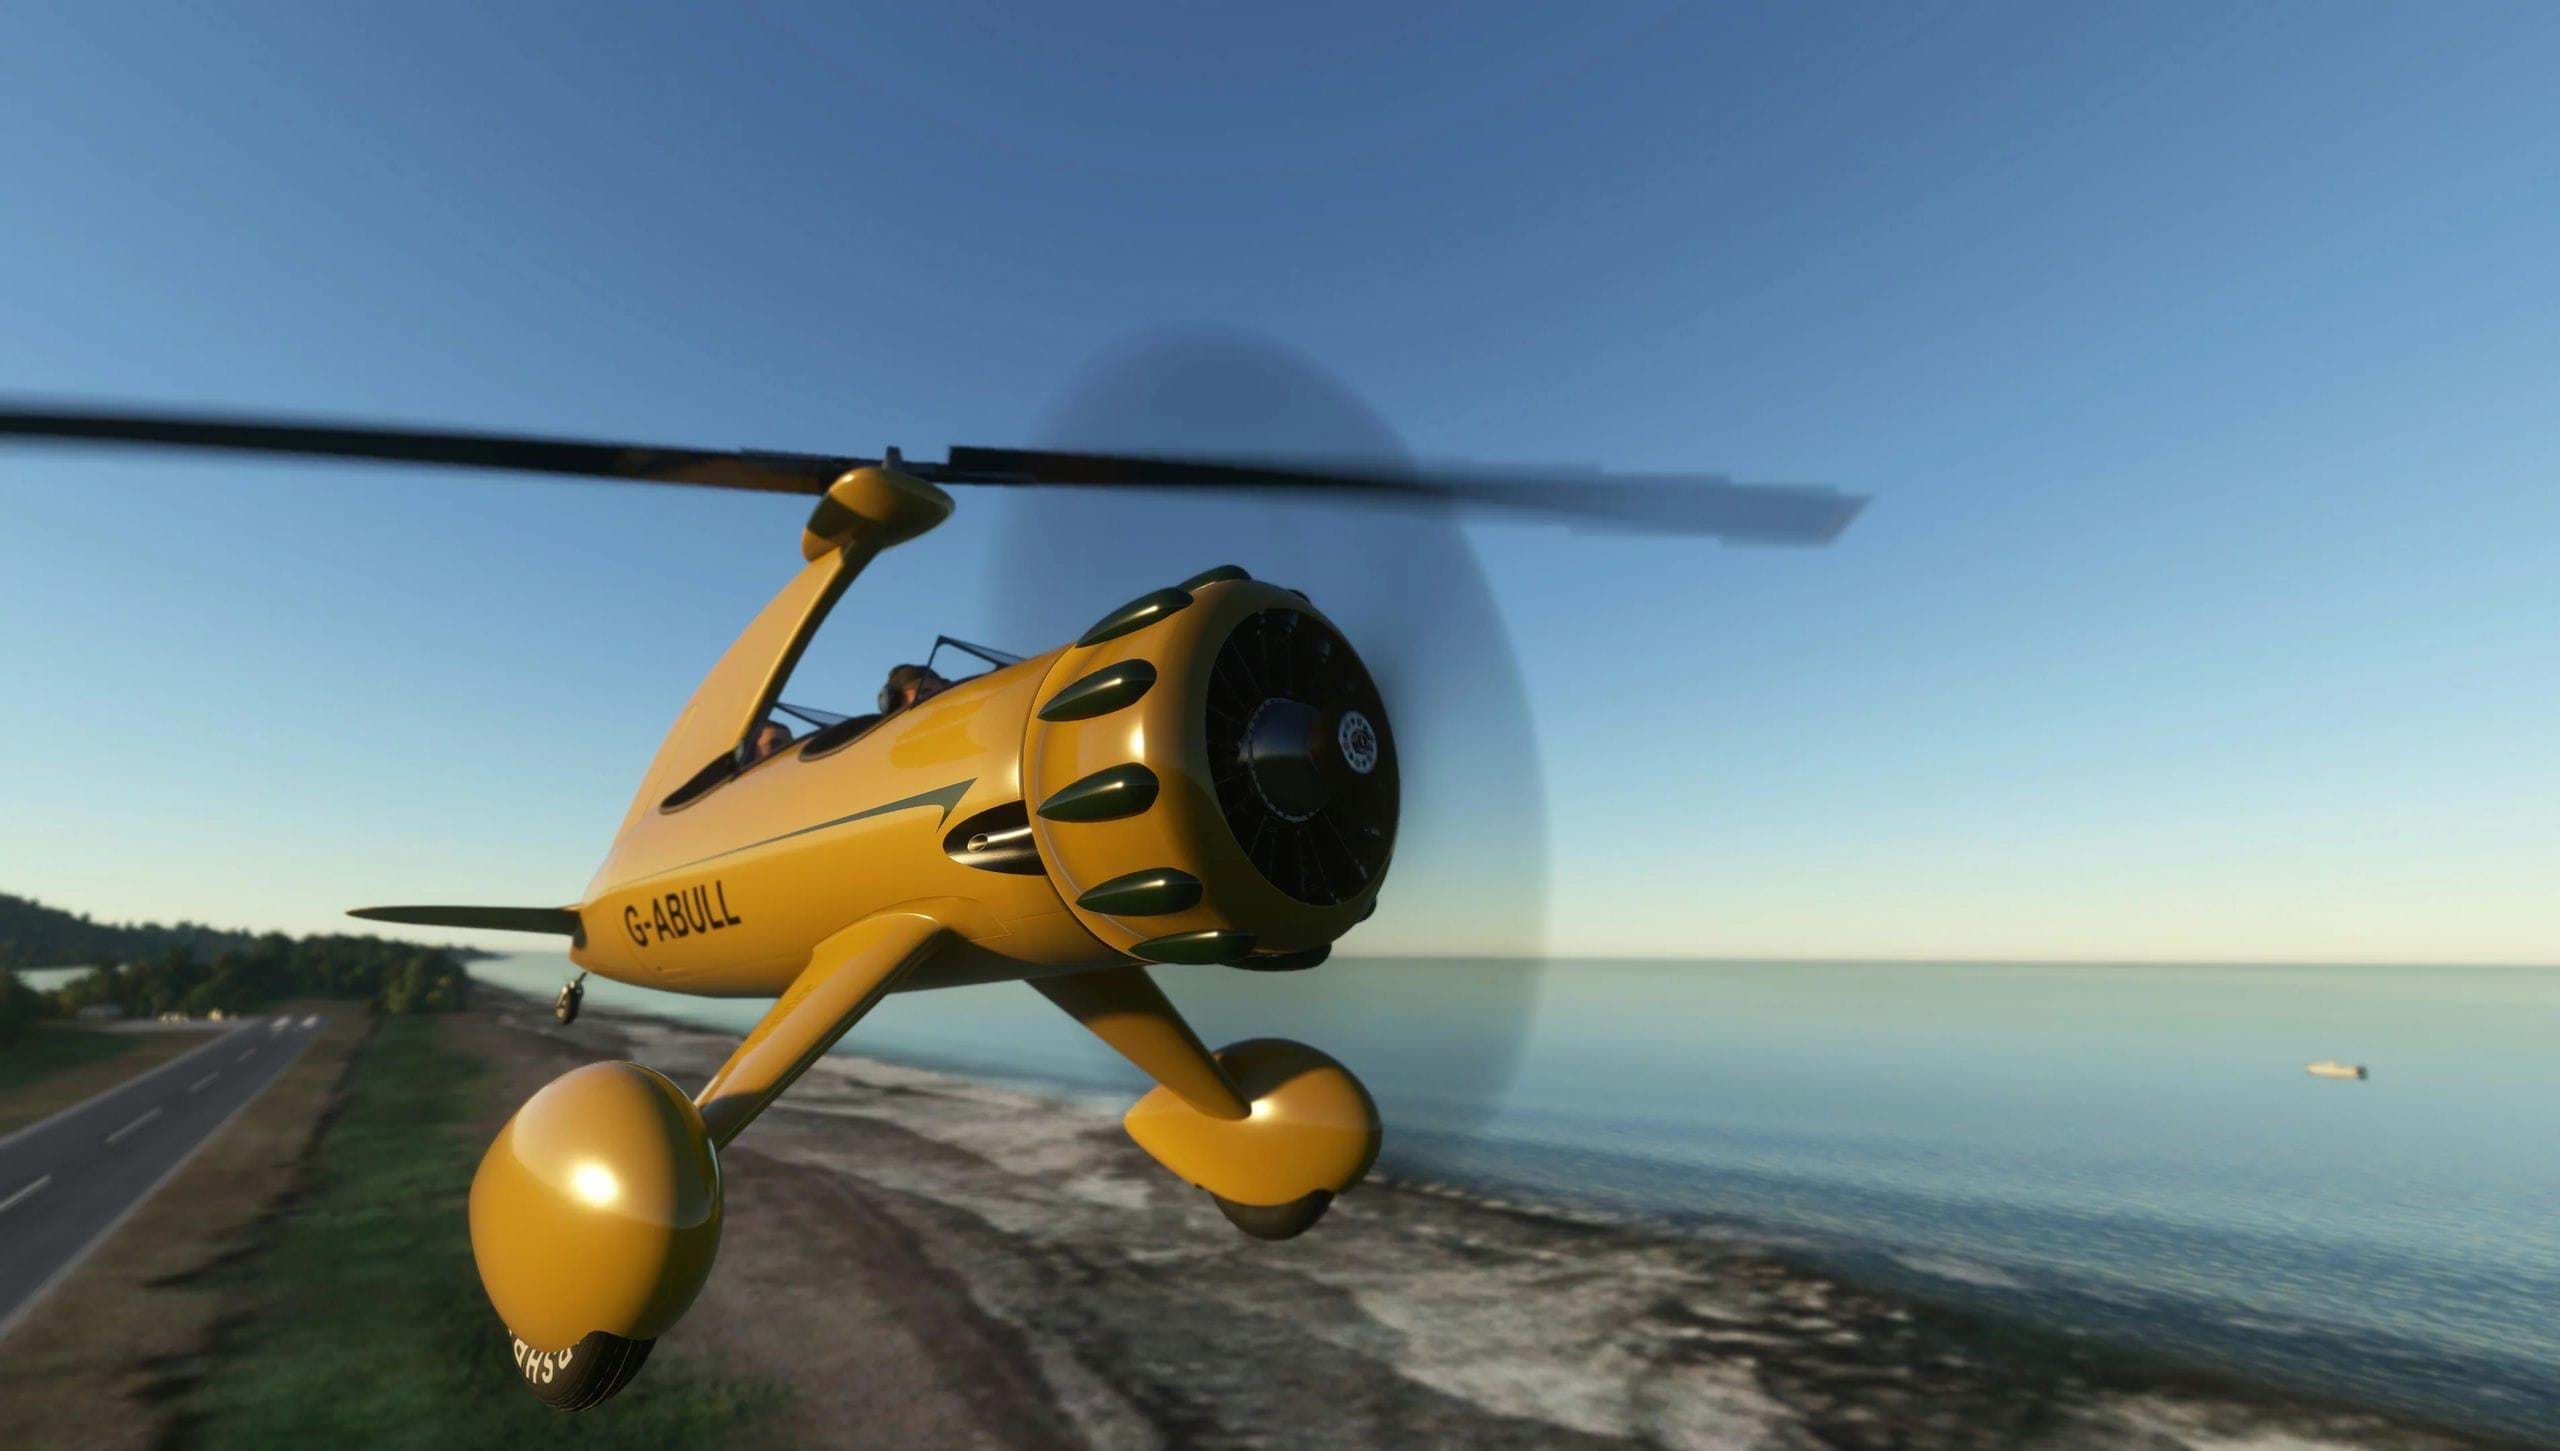 Rara-Avis Sims Bulldog Autogyro for MSFS